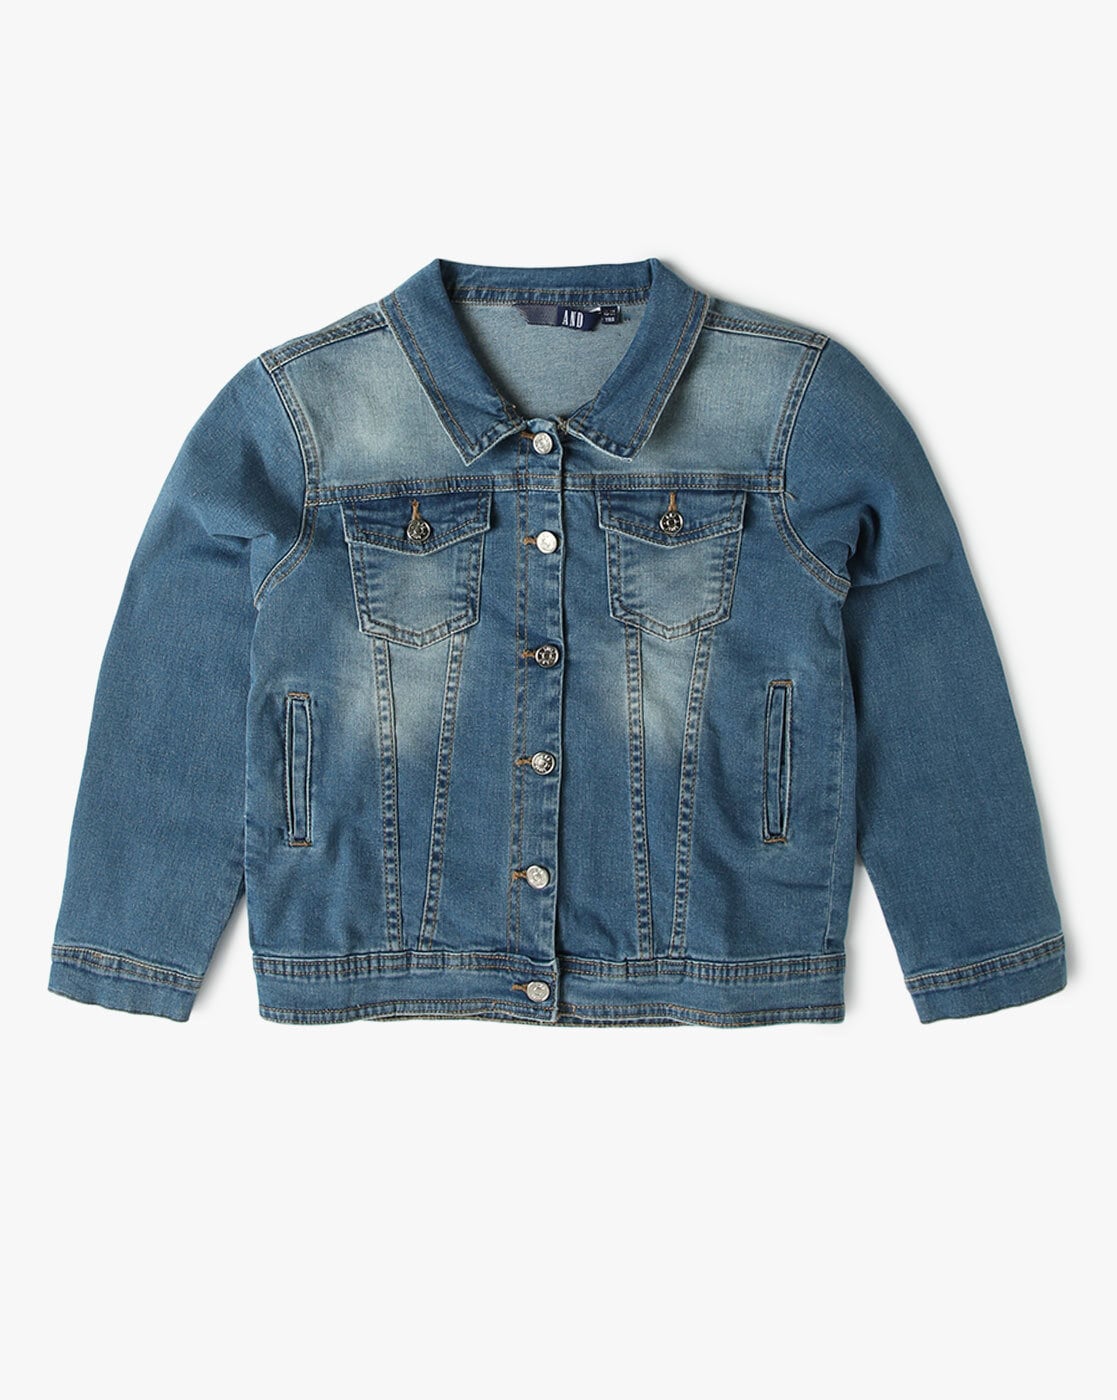 Buy Navy Blue Jackets & Coats for Boys by ZALIO Online | Ajio.com